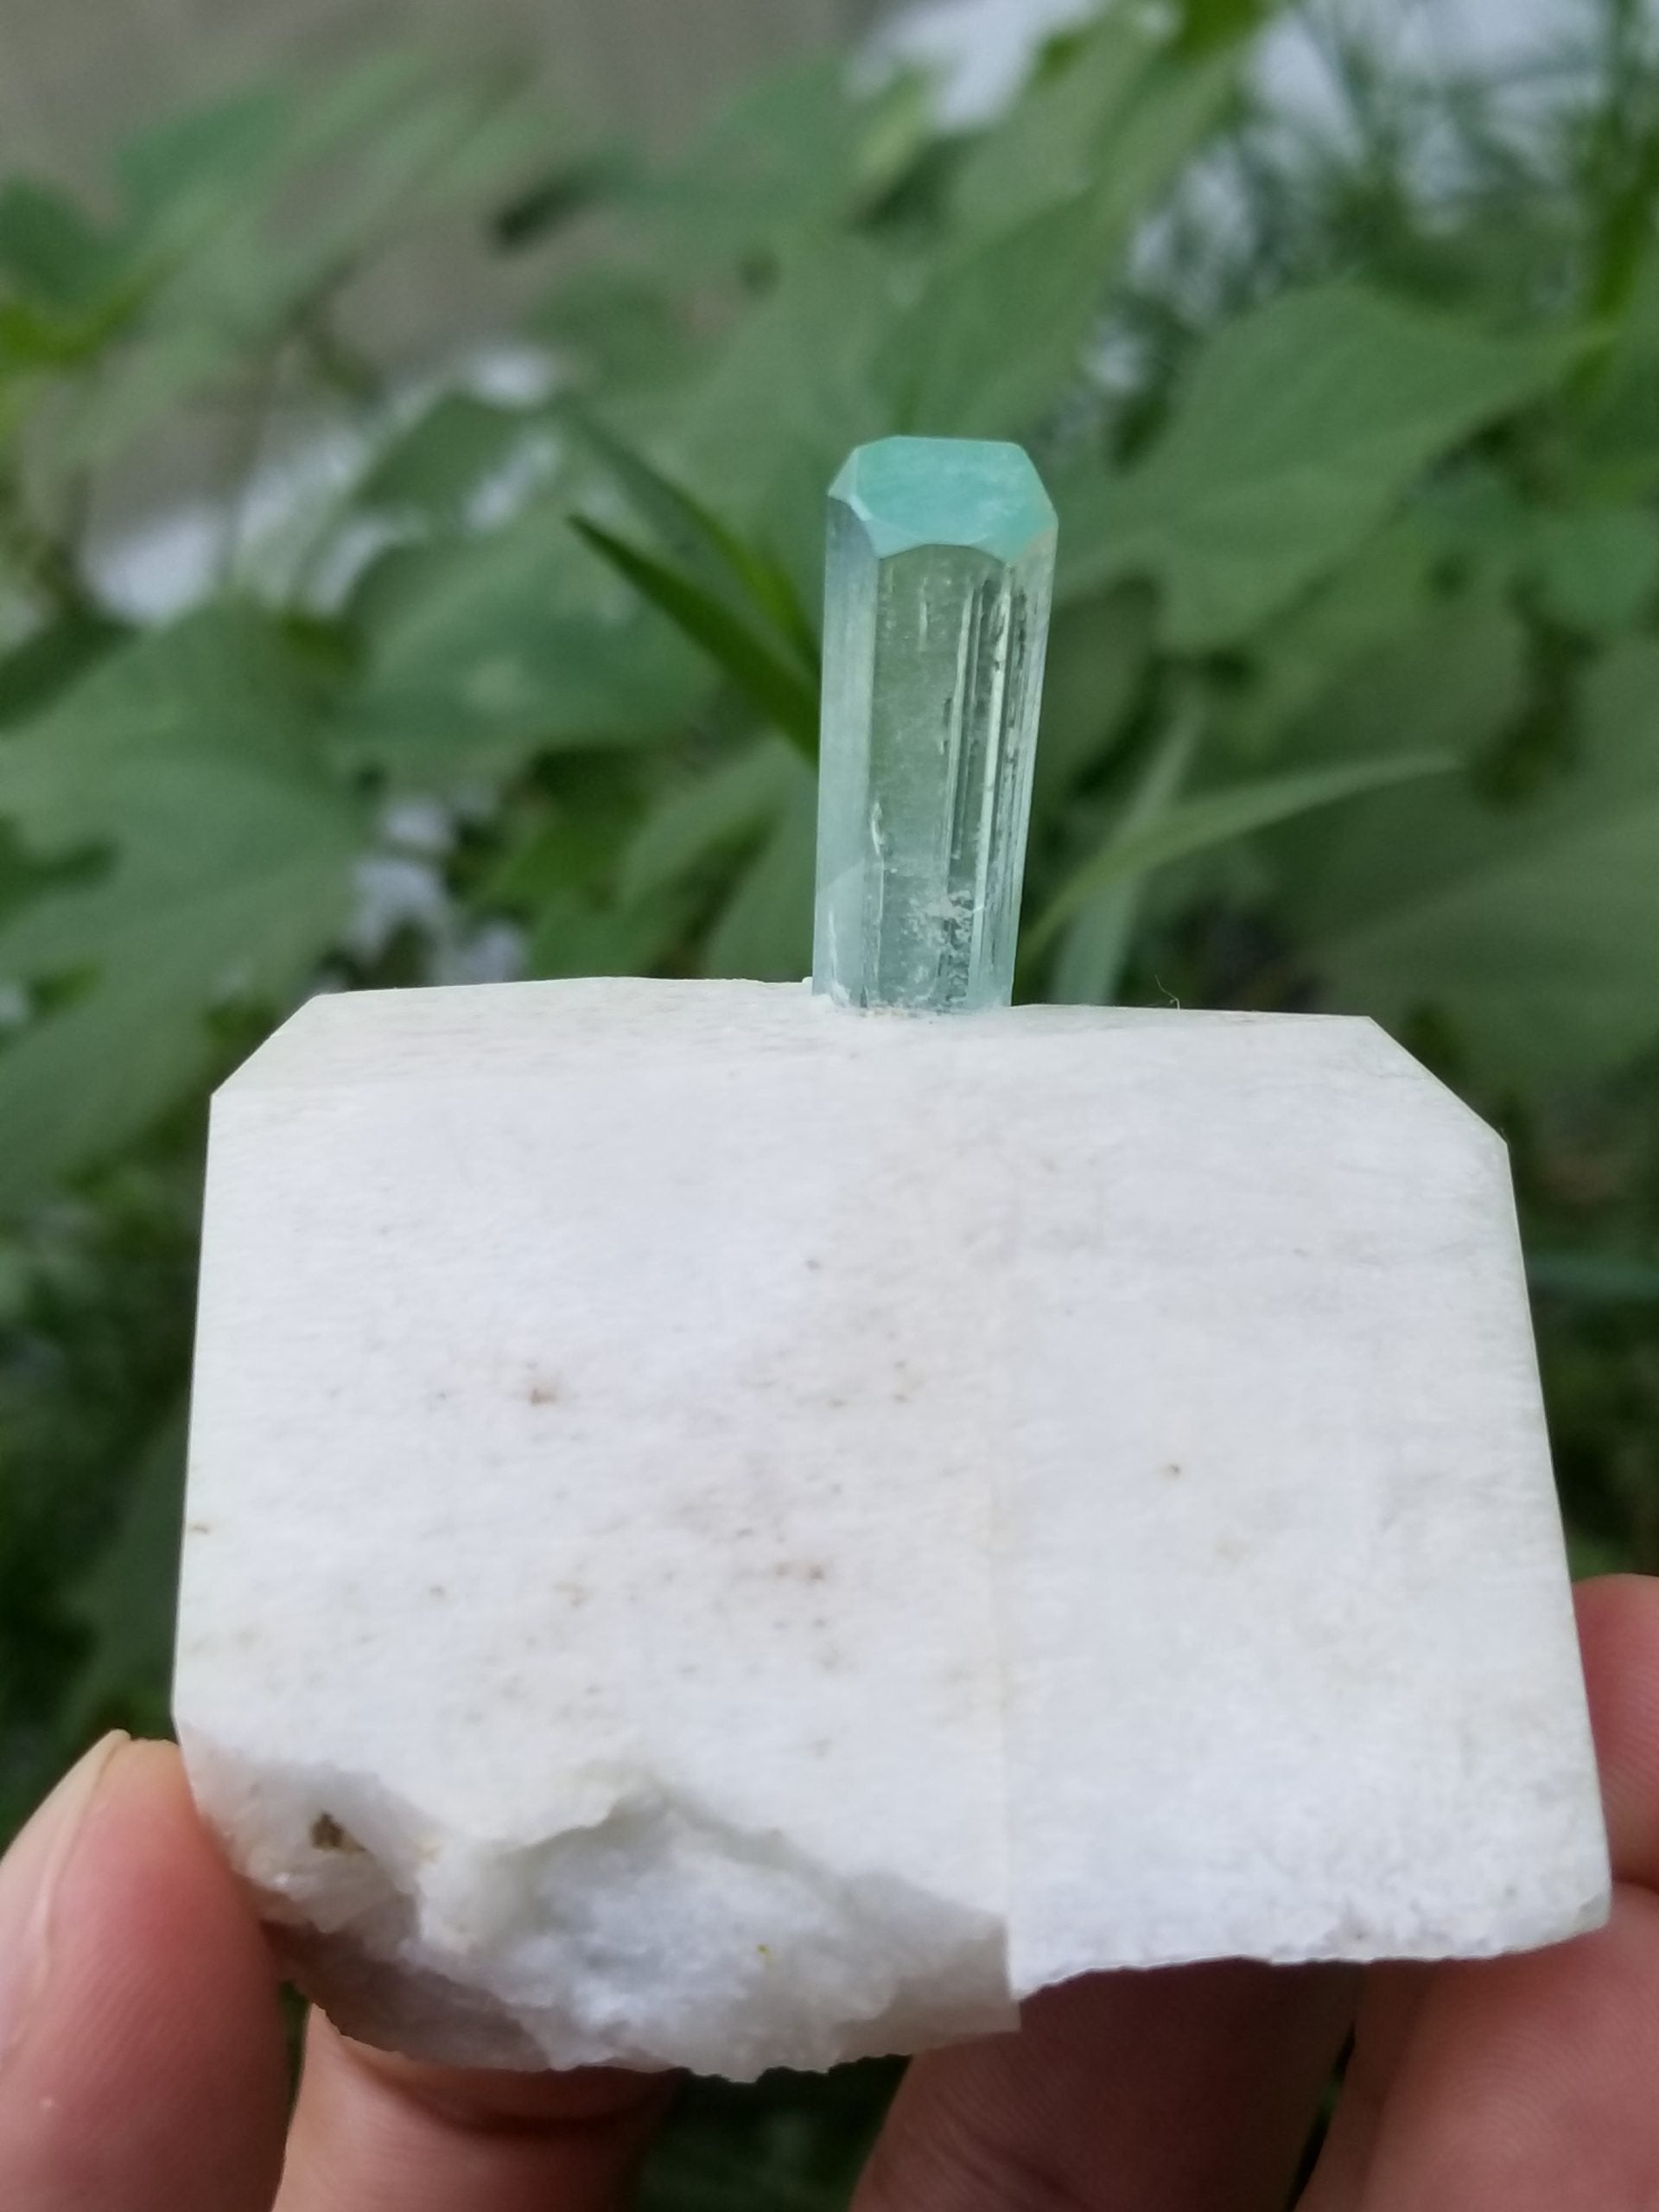 Gorgeous Aquamarine Crystal on matrix microcline